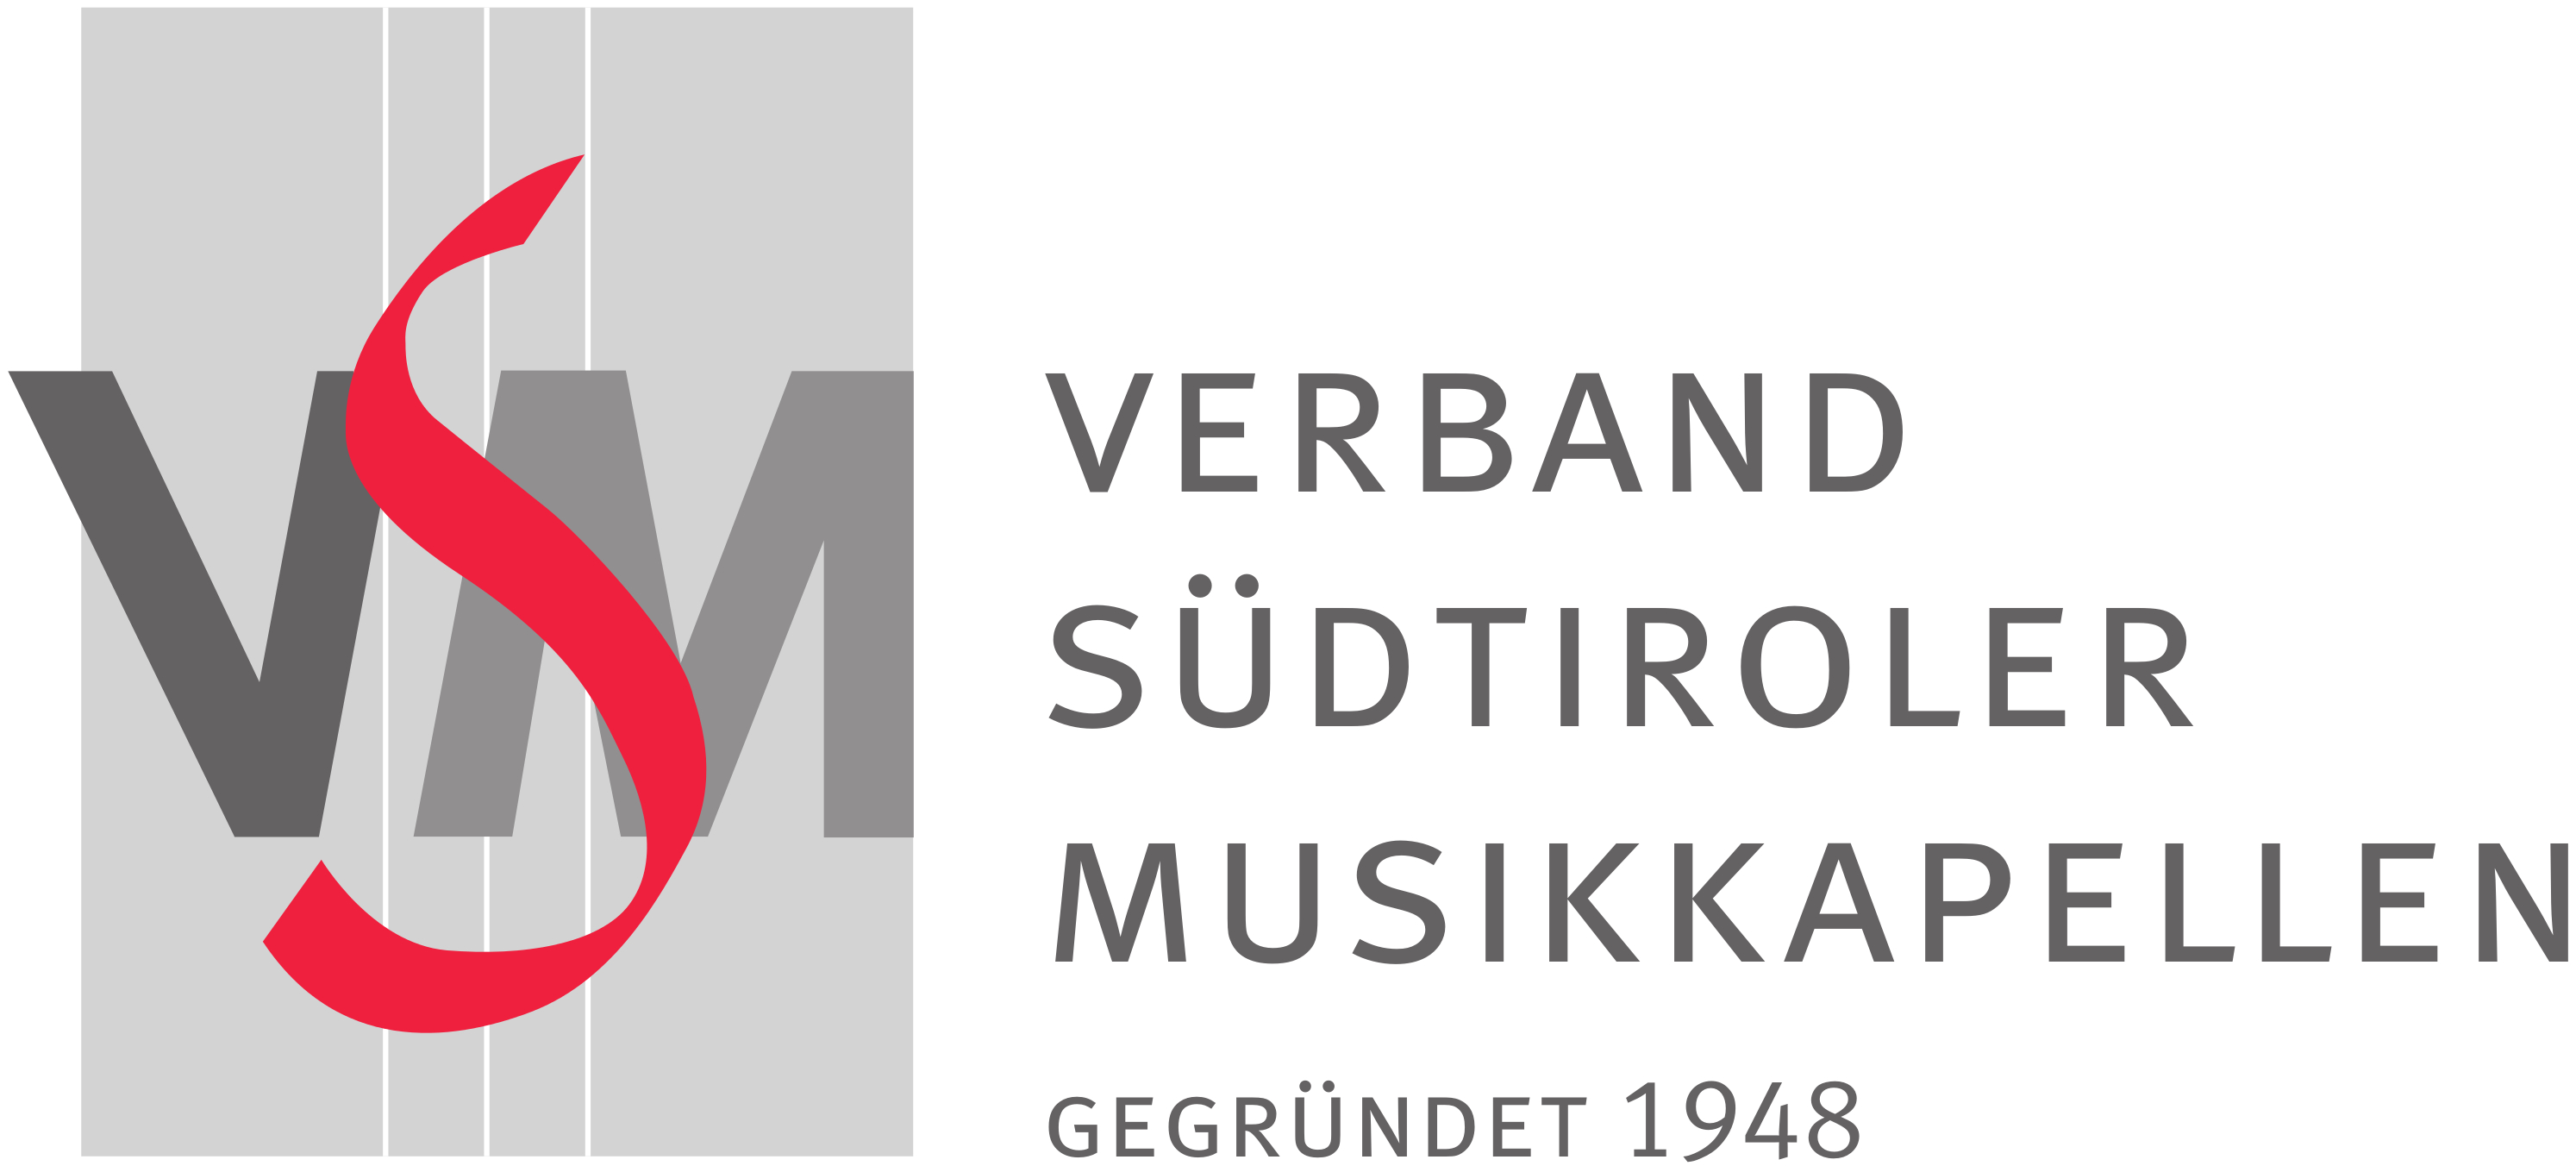 Verband Südtroler Musikkapellen Logo